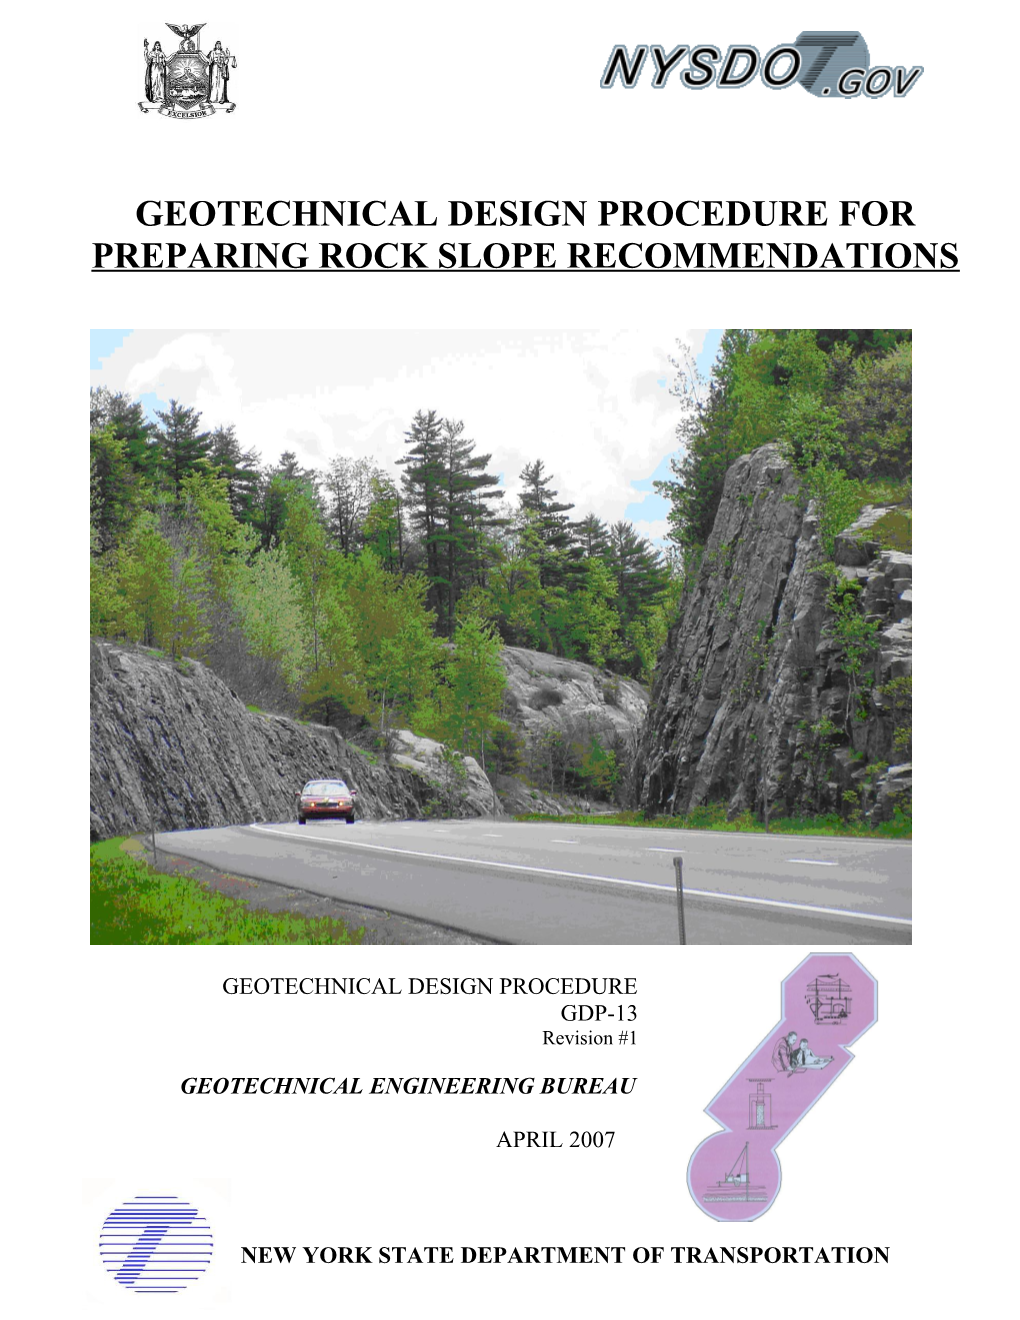 Geotechnical Design Procedure for Preparing Rock Slope Recommendations